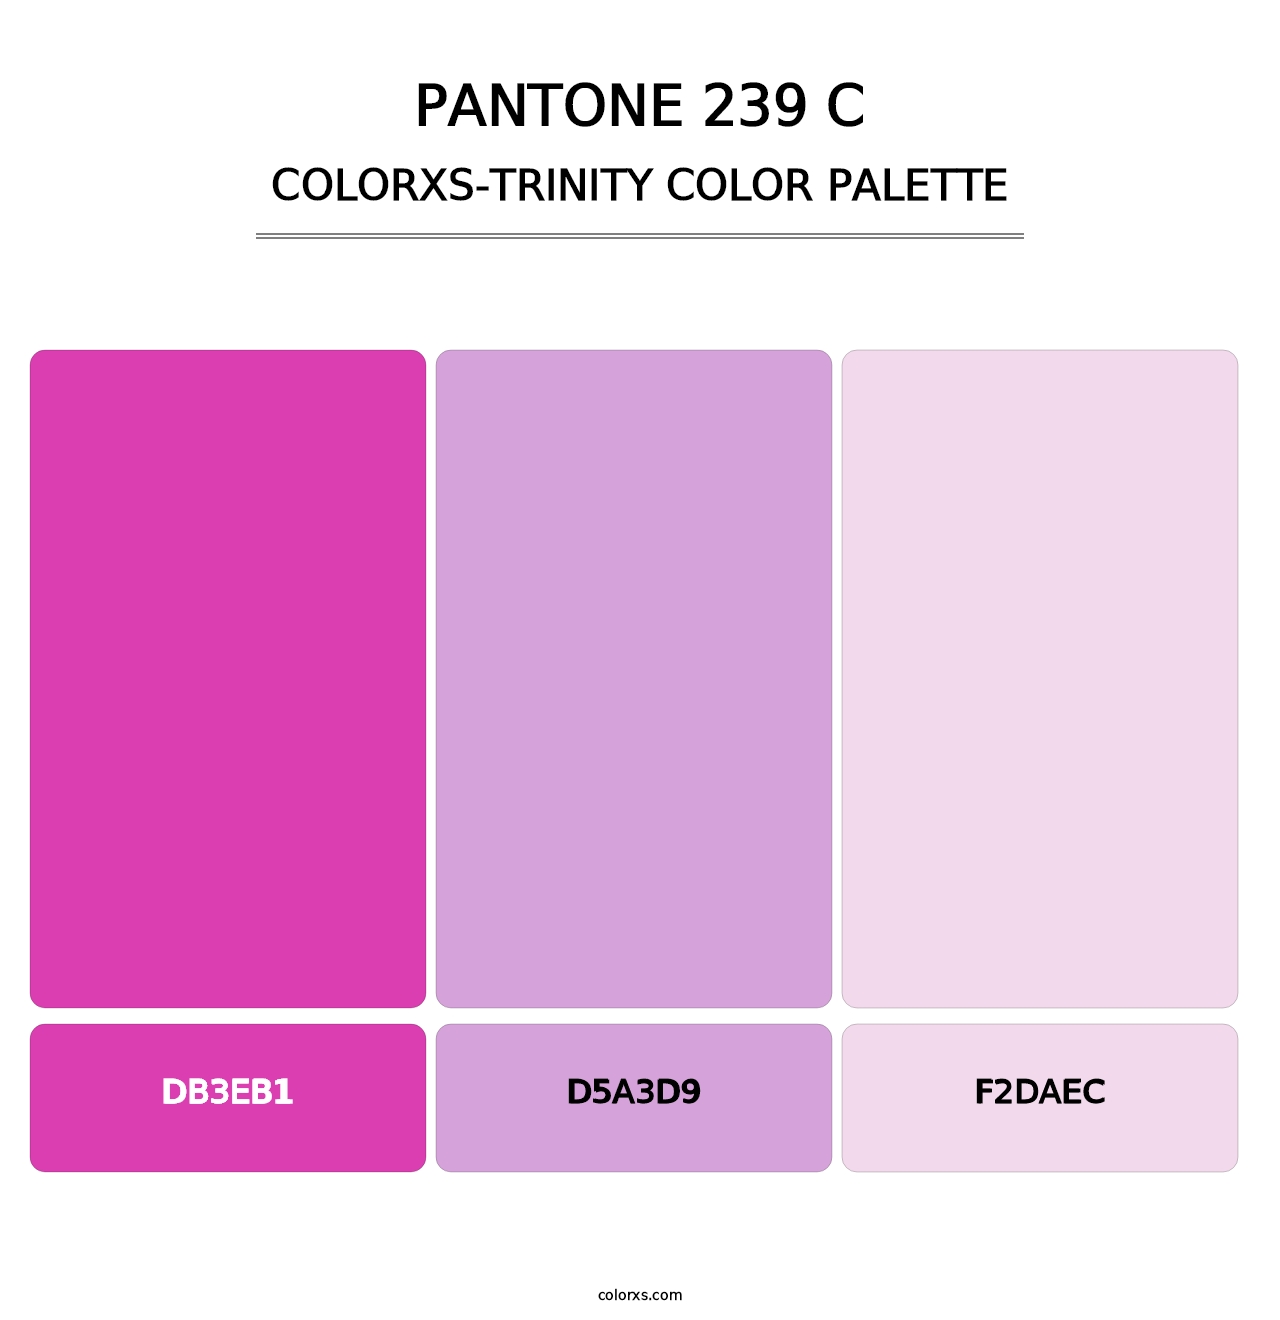 PANTONE 239 C - Colorxs Trinity Palette